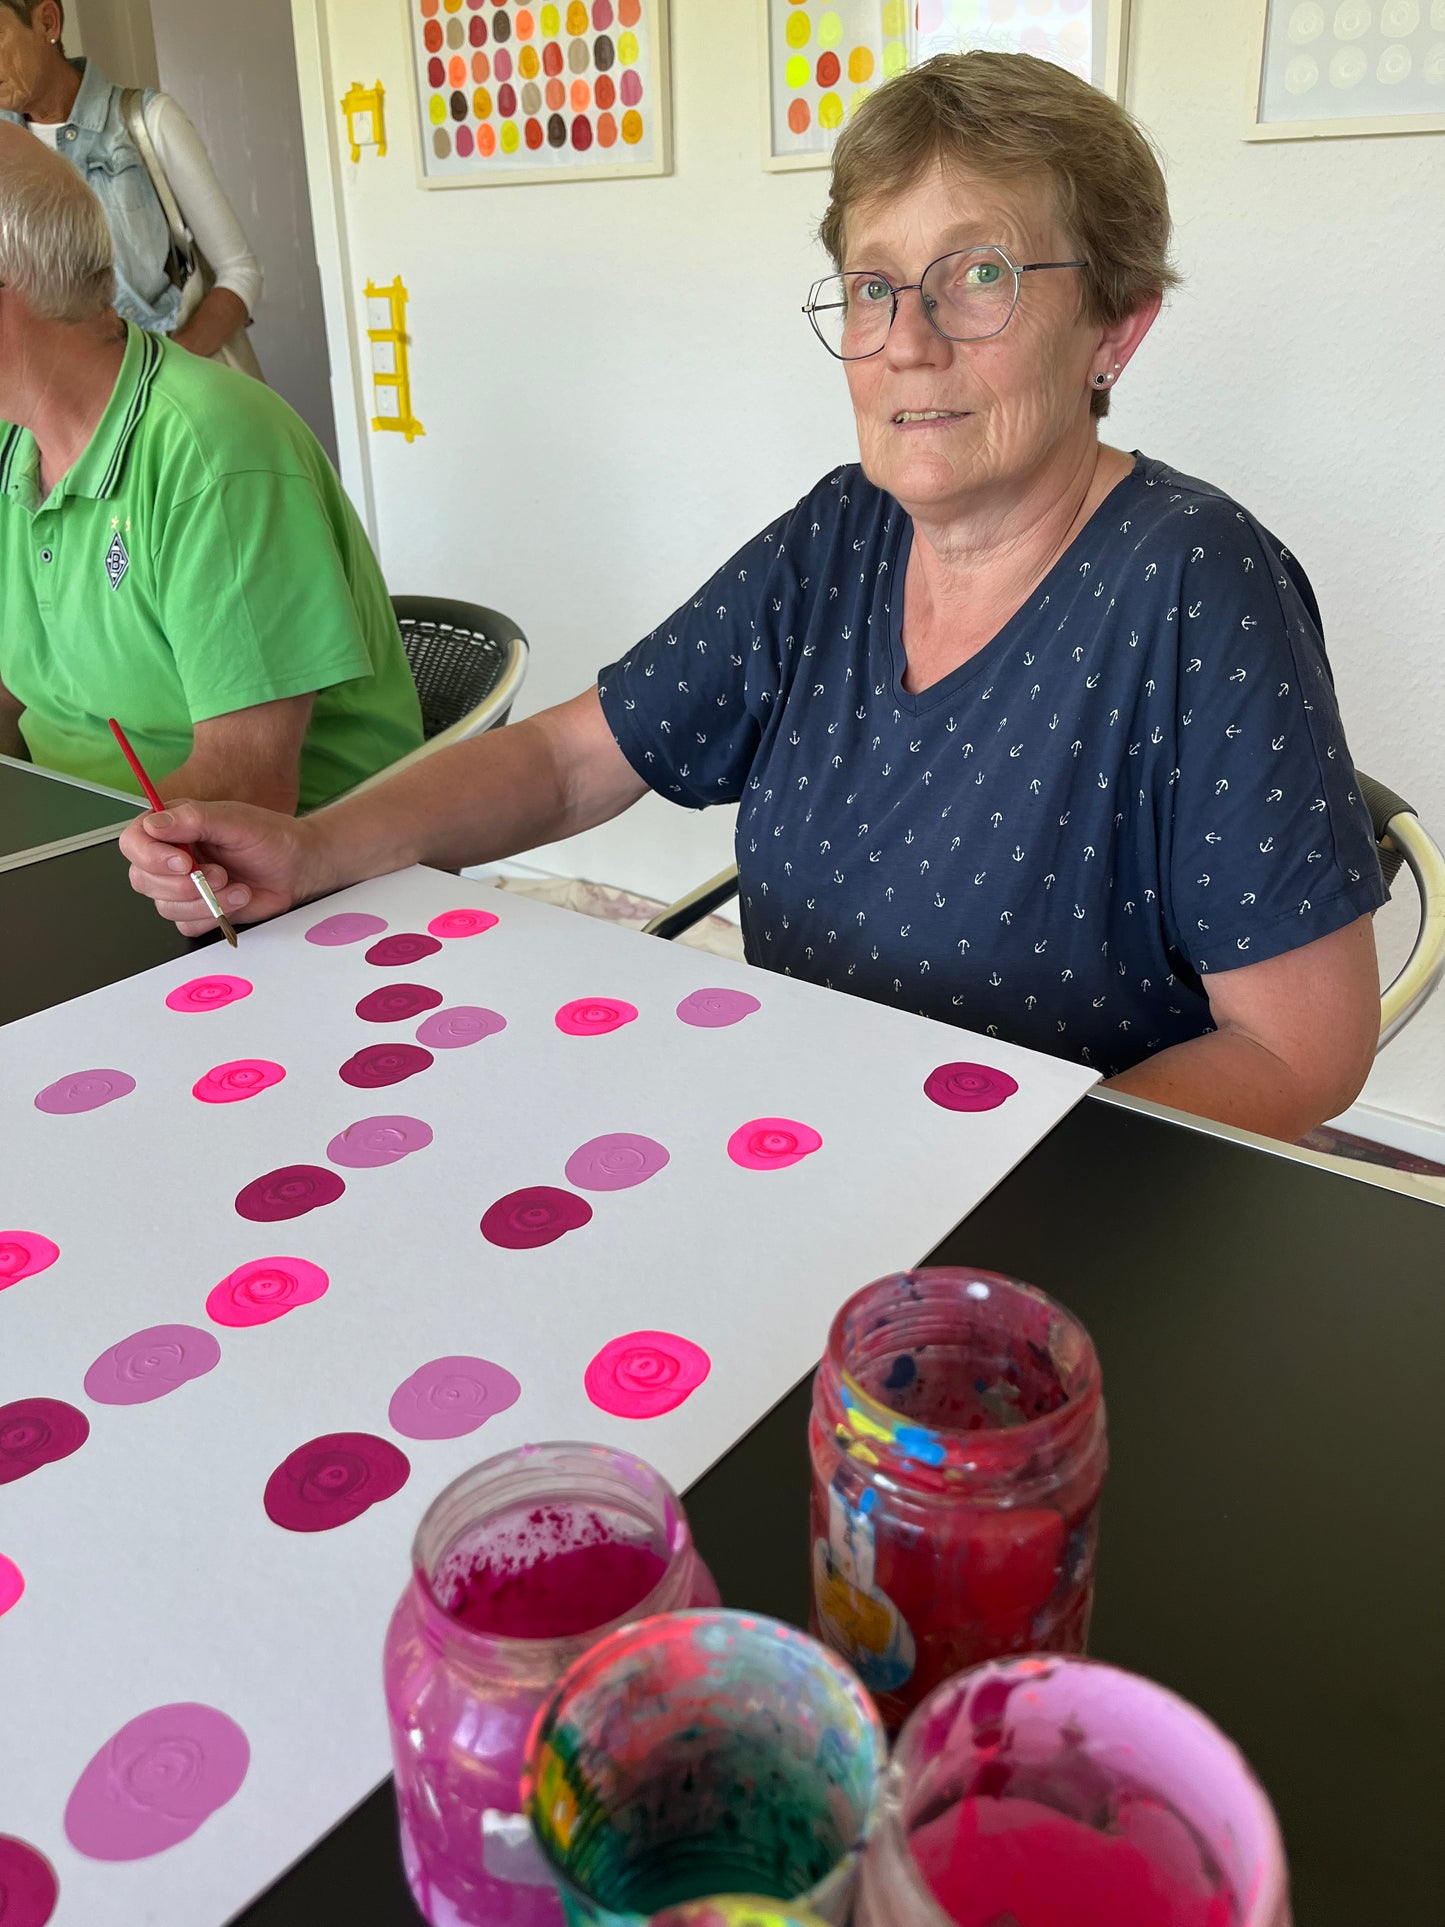 "Habits" Painting Workshop with Janine in Bietigheim-Bissingen, Germany